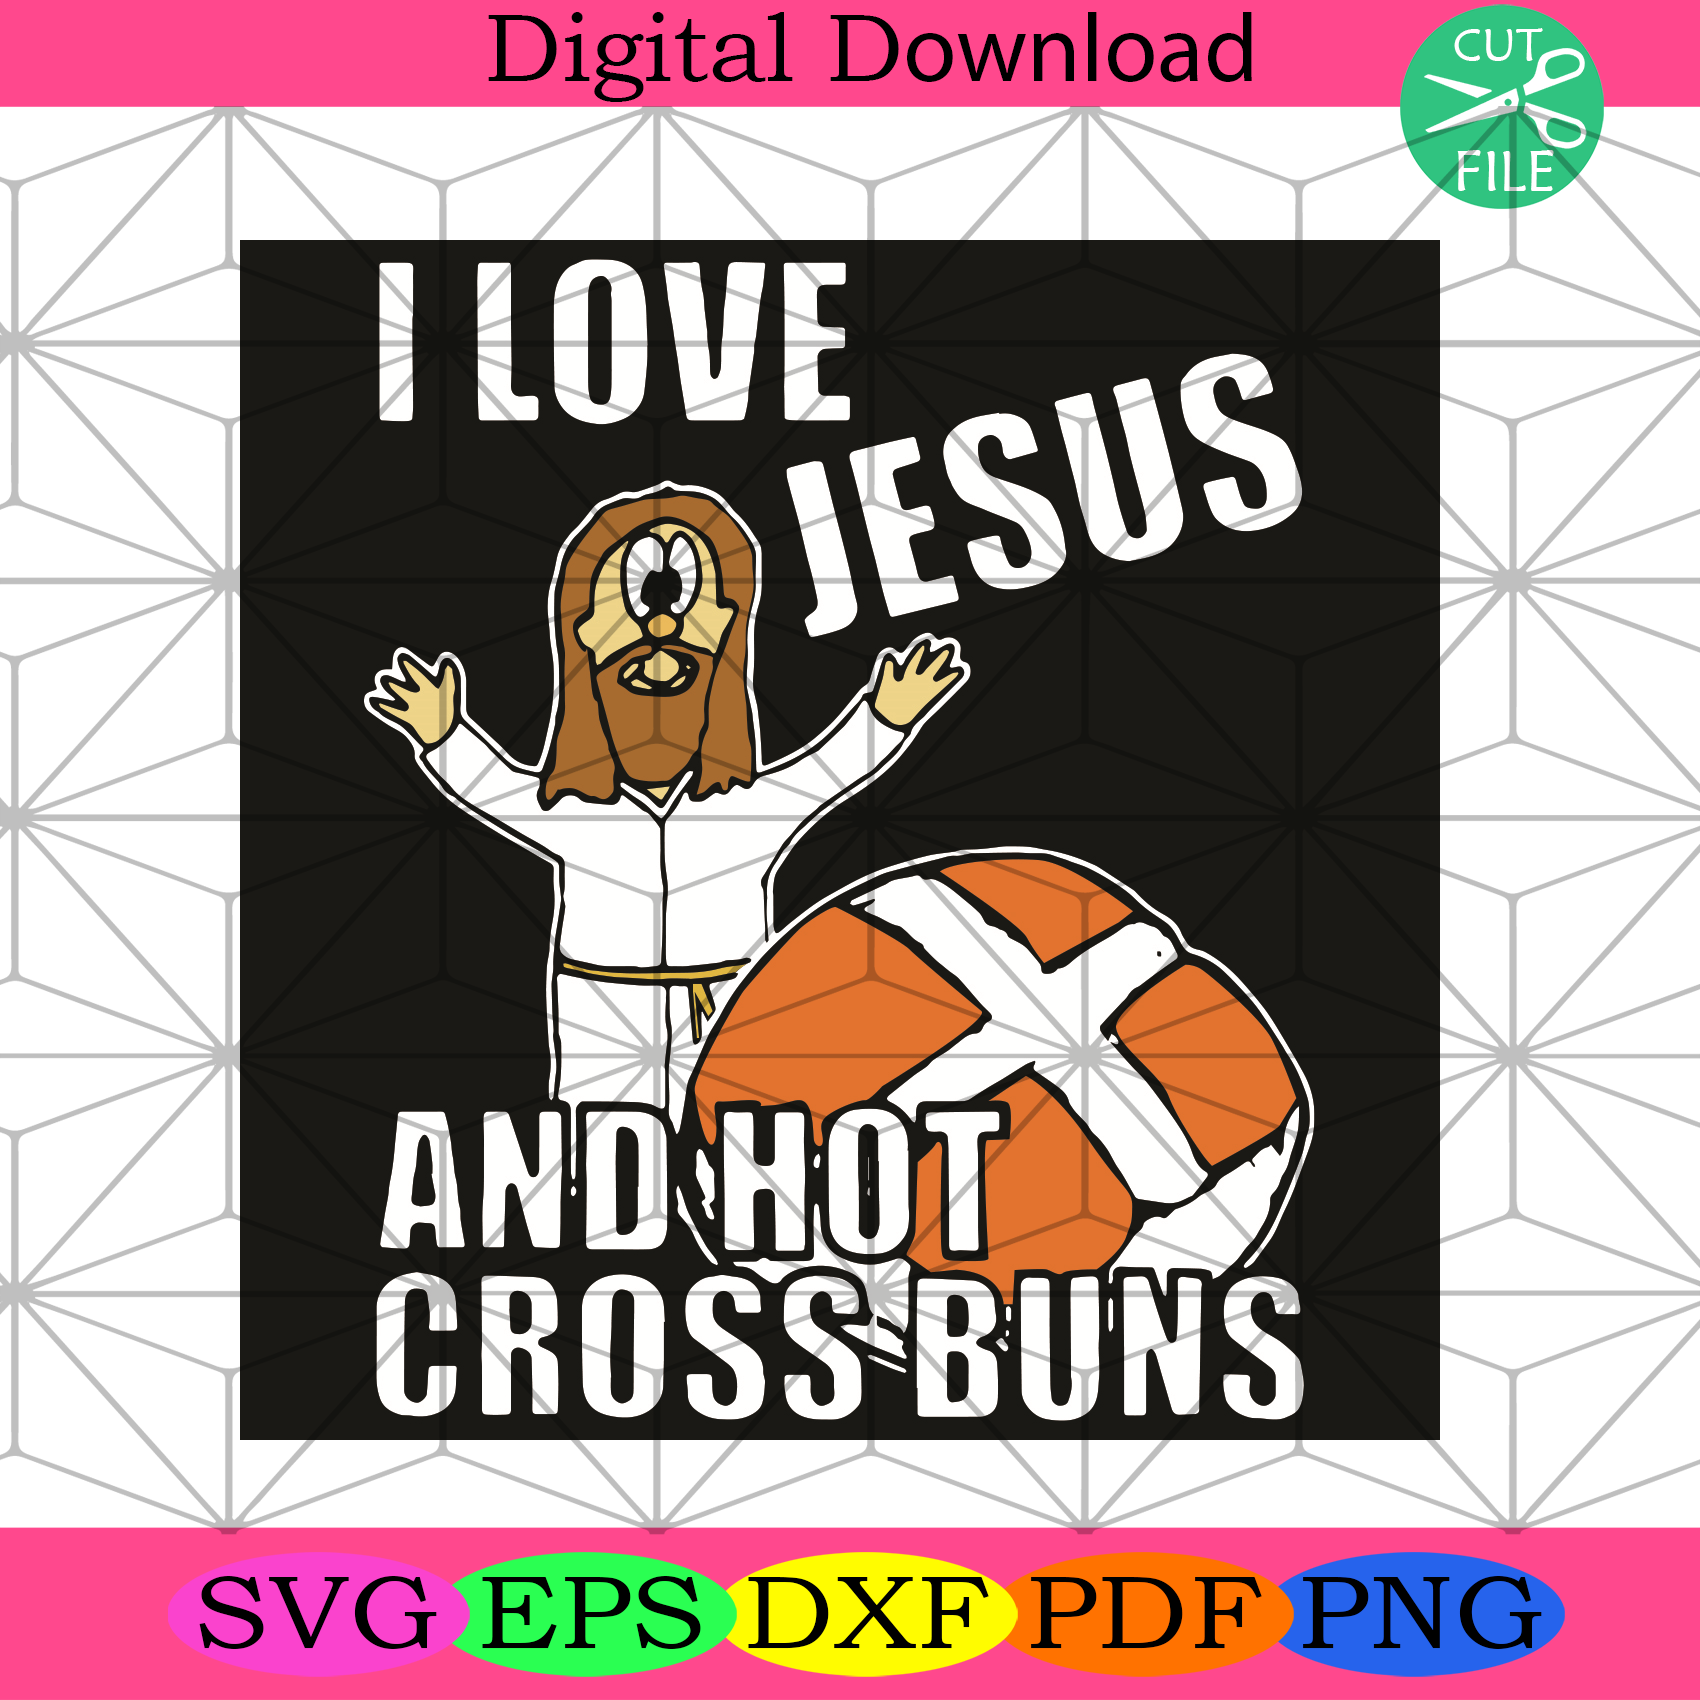 I love Jesus And Hot Cross Buns Svg Trending Svg, Jesus Svg